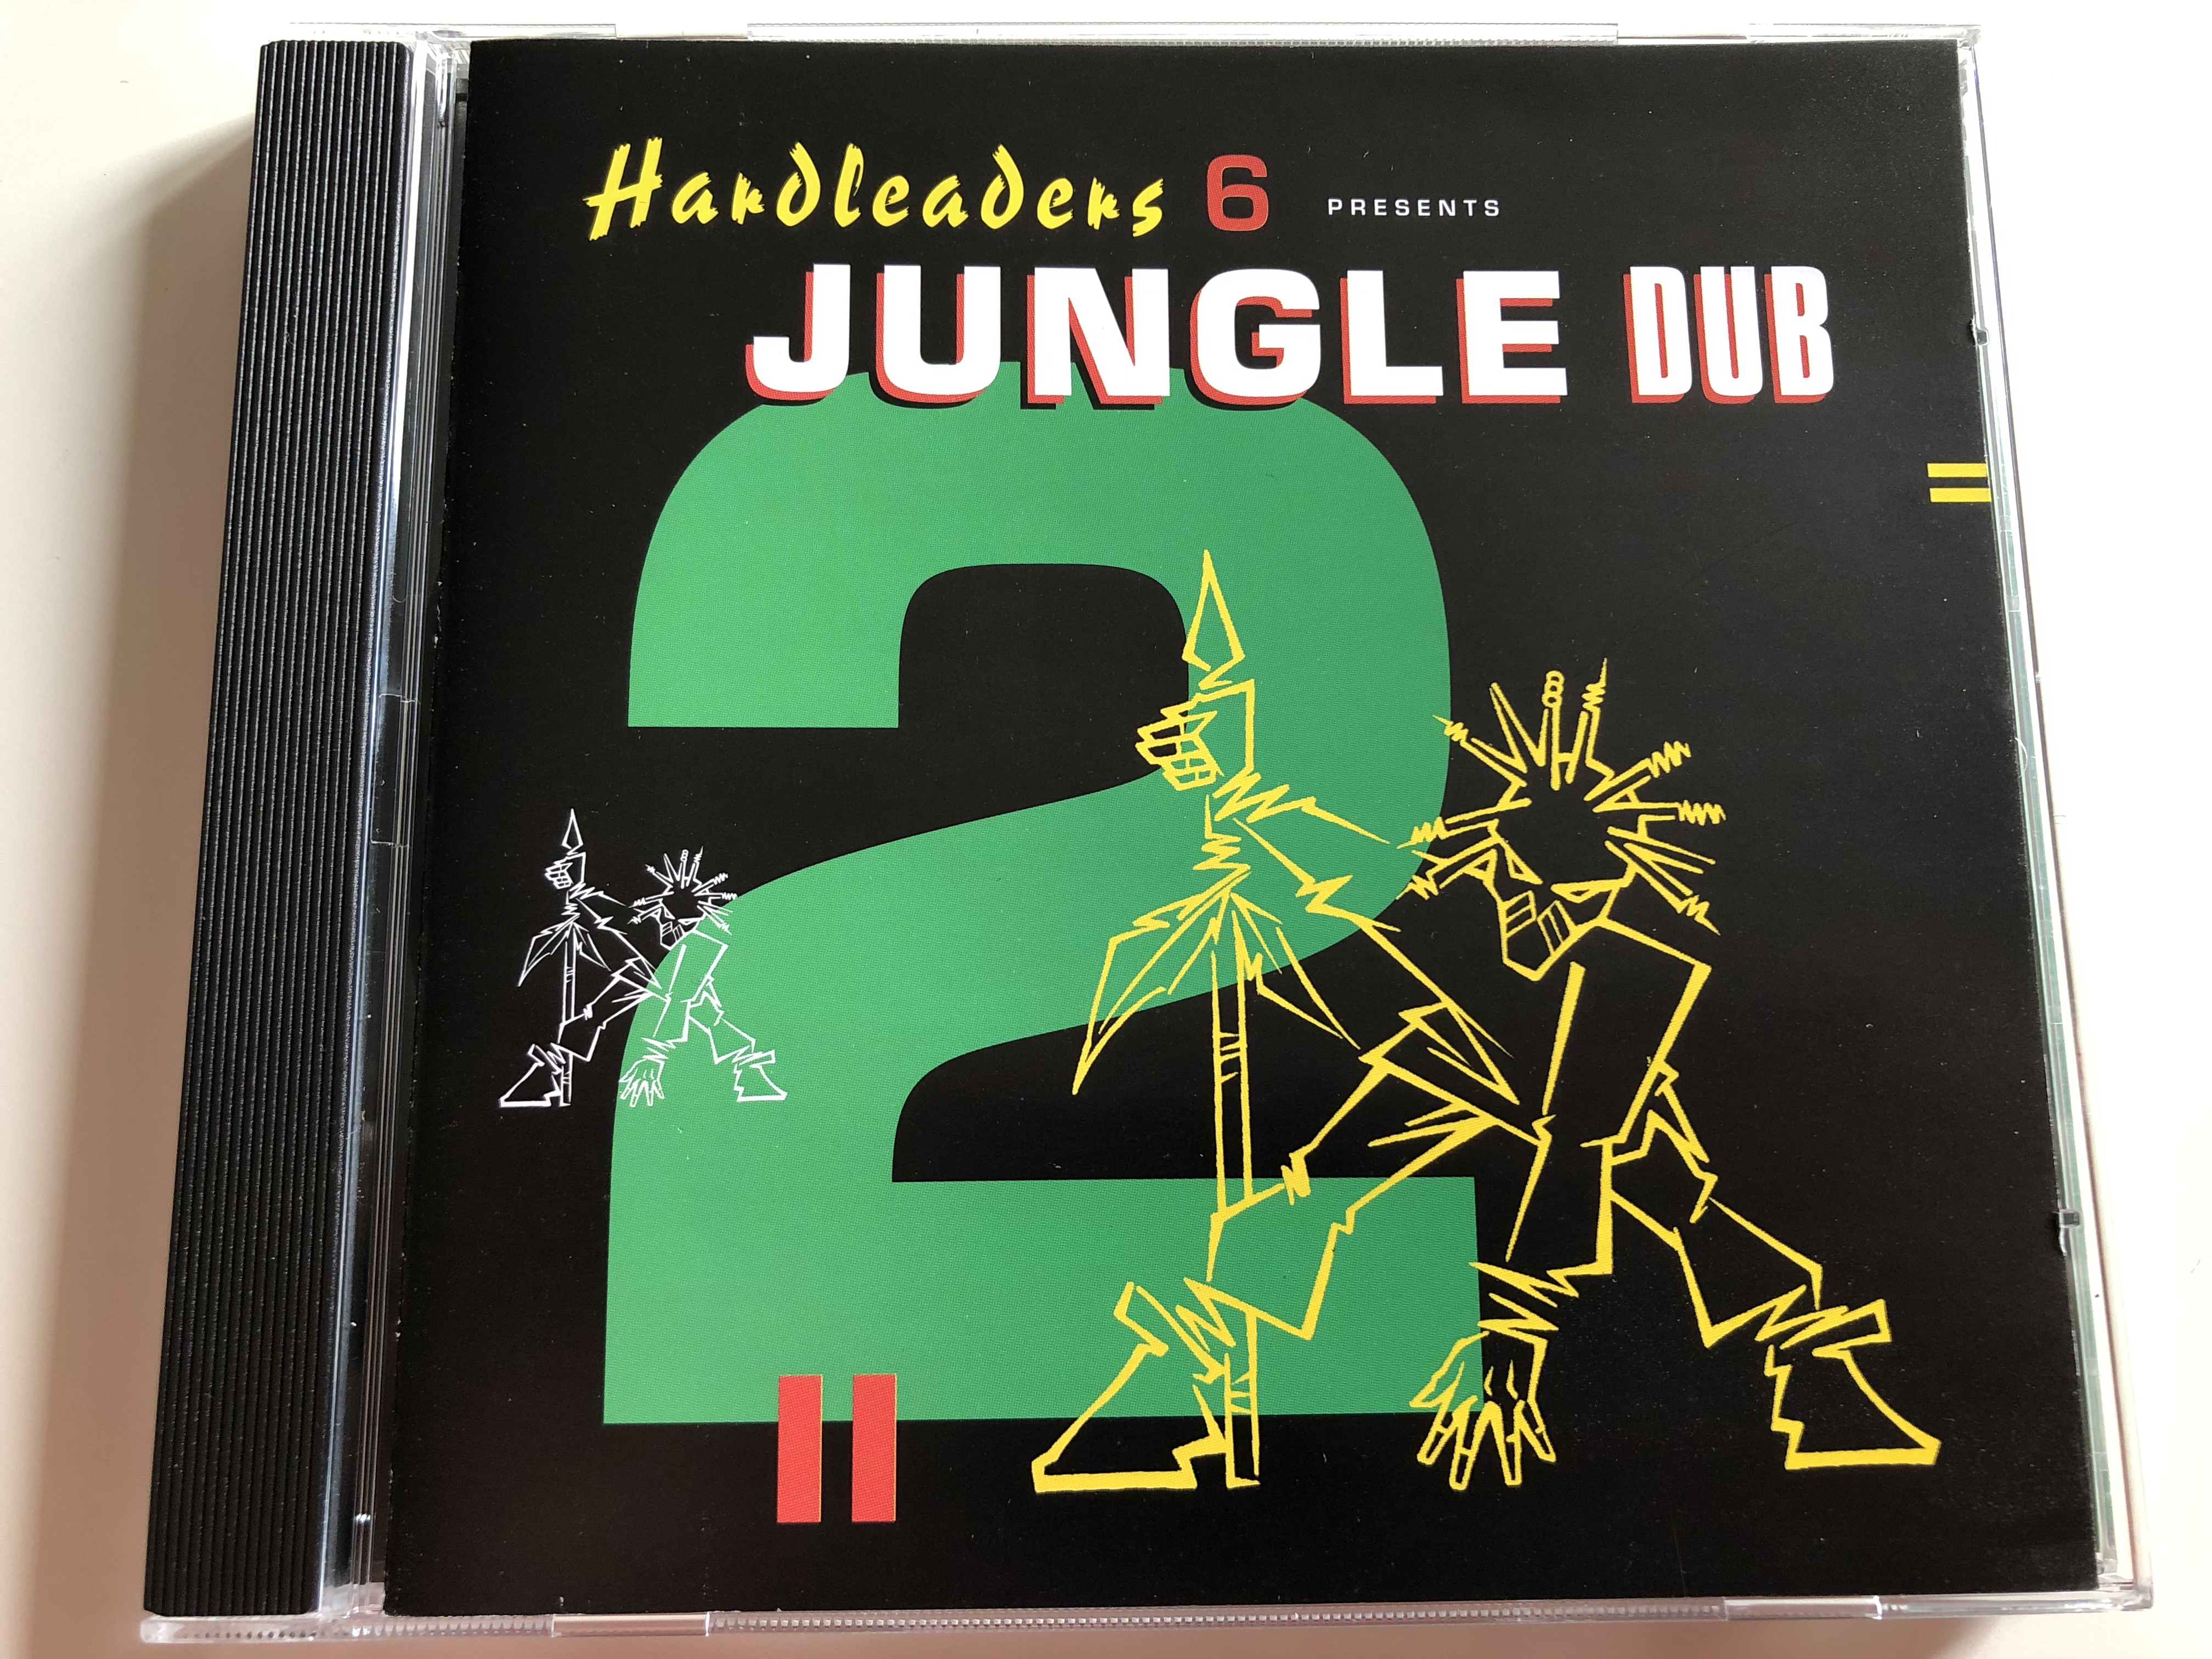 hardleaders-6-presents-jungle-dub-2-kickin-records-audio-cd-1995-kickcd17-1-.jpg